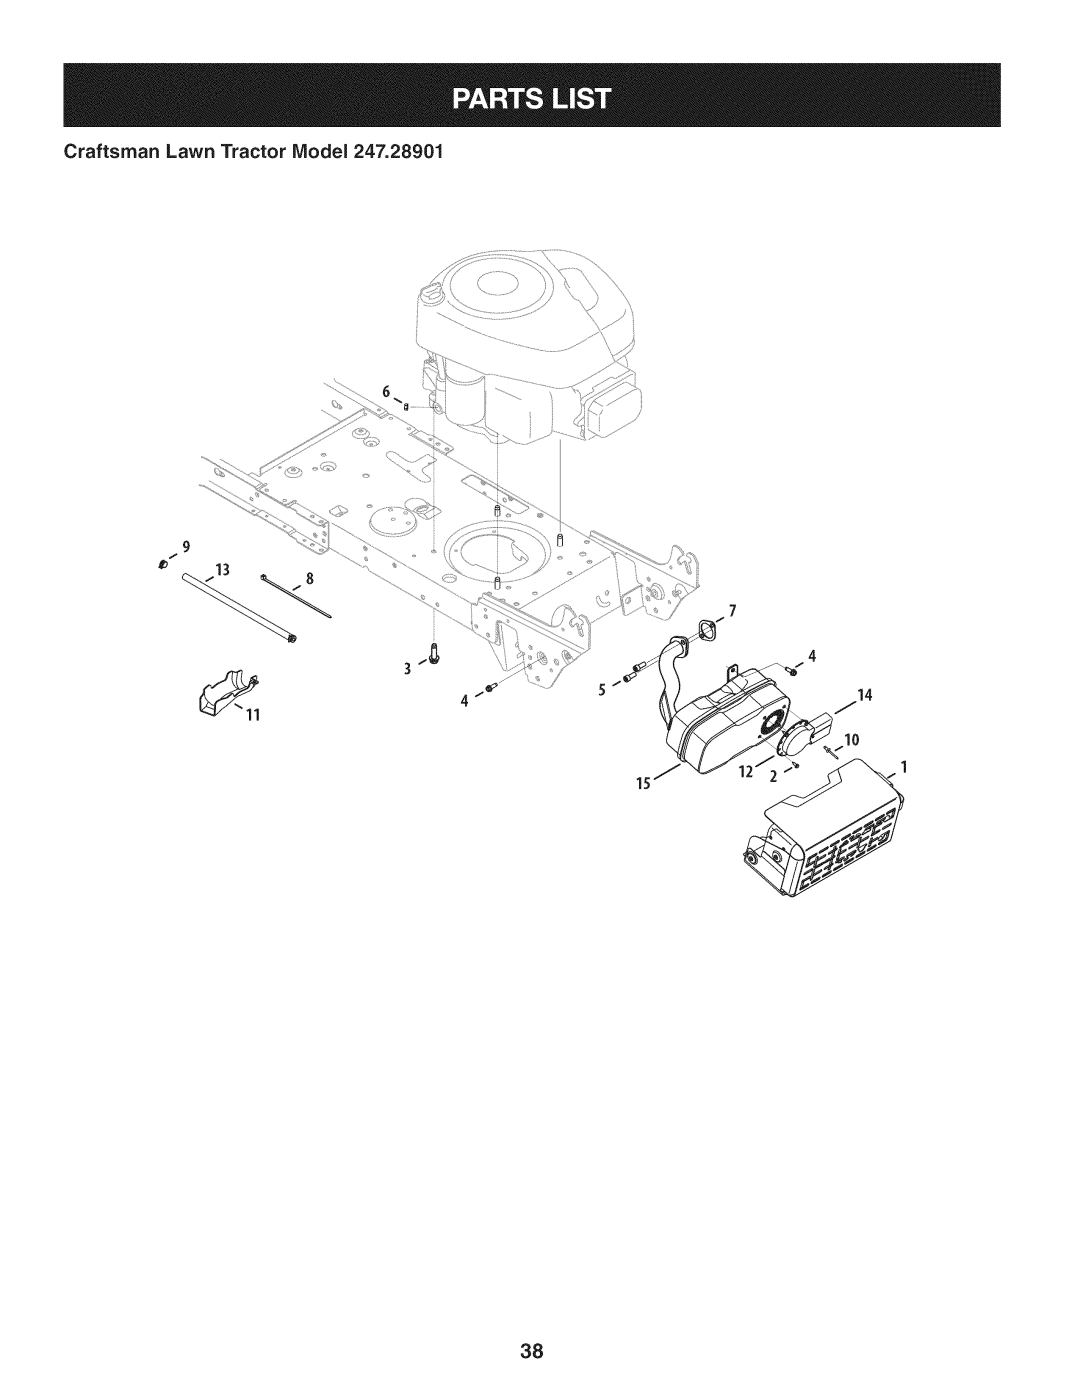 Craftsman 247.28901 manual Craftsman Lawn Tractor IViodel 